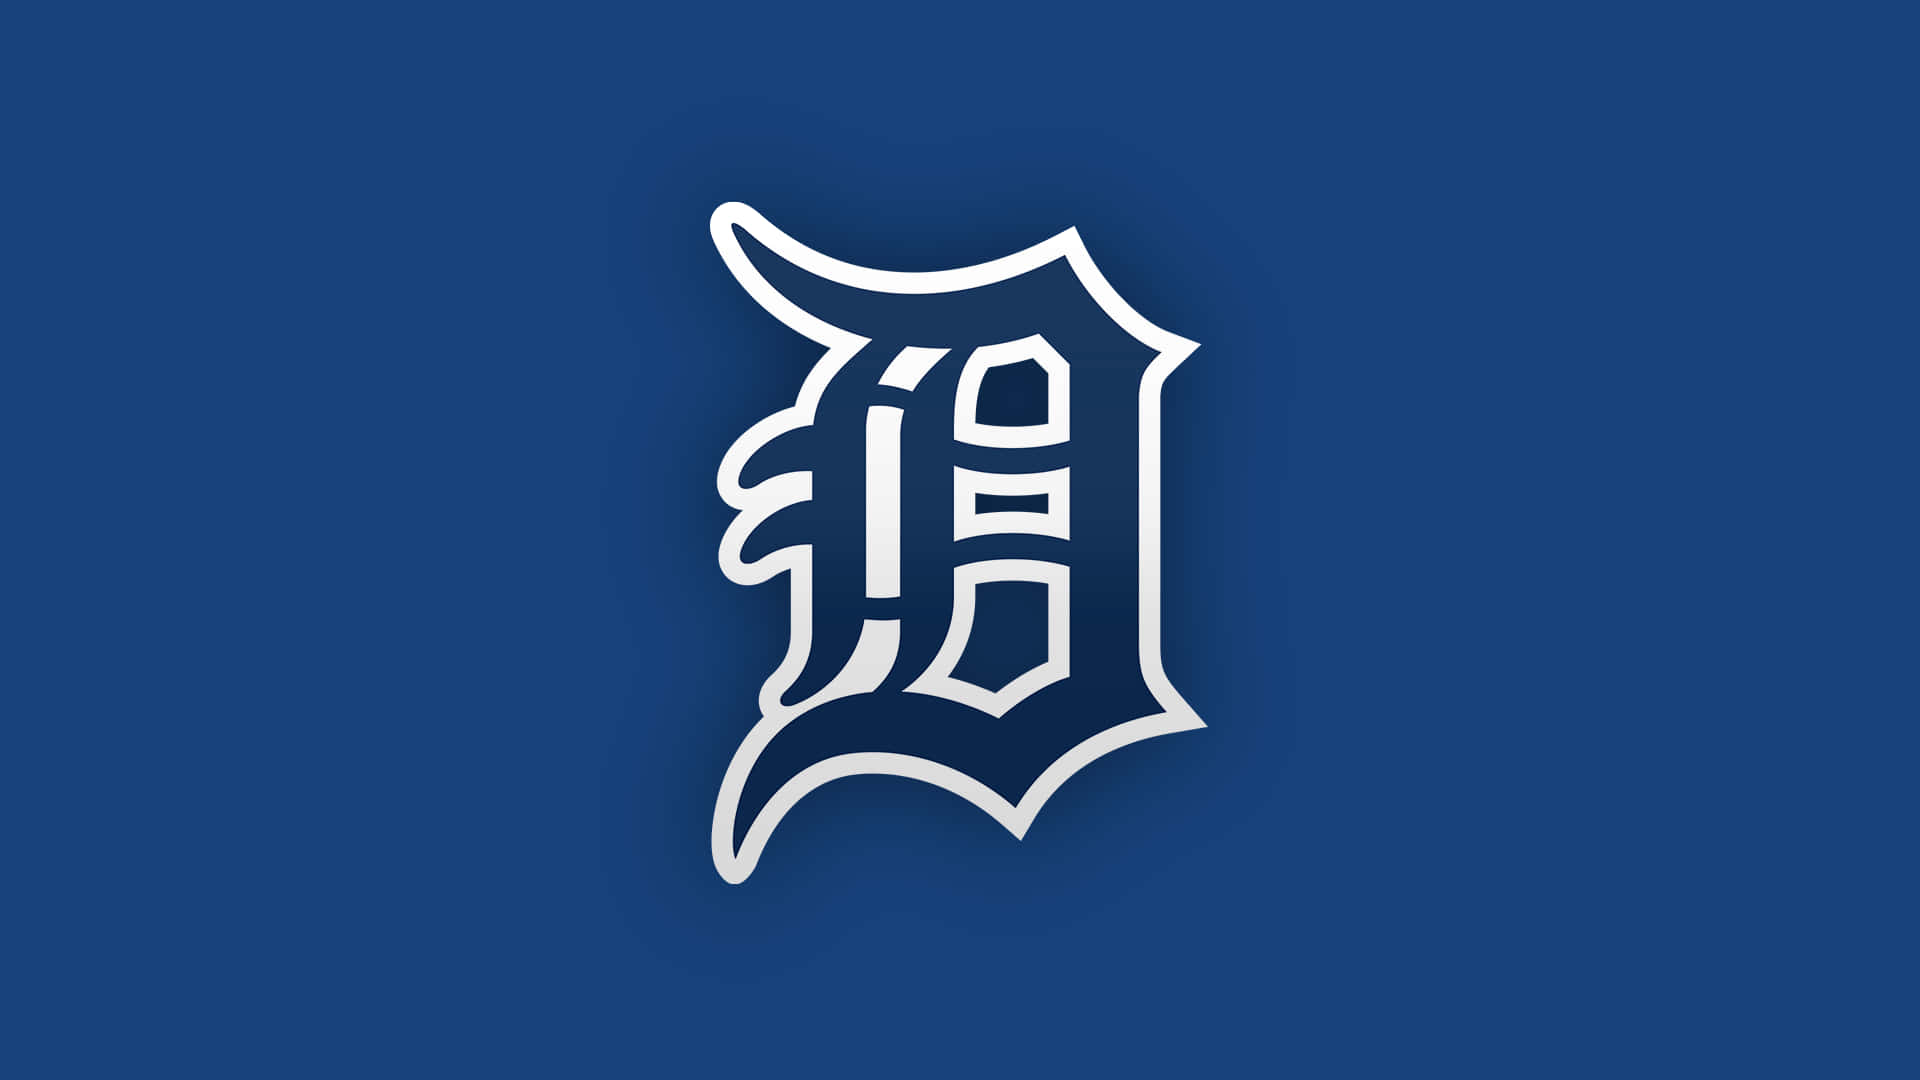 Detroit Tigers Logo In Dark Blue Gothic Font Wallpaper